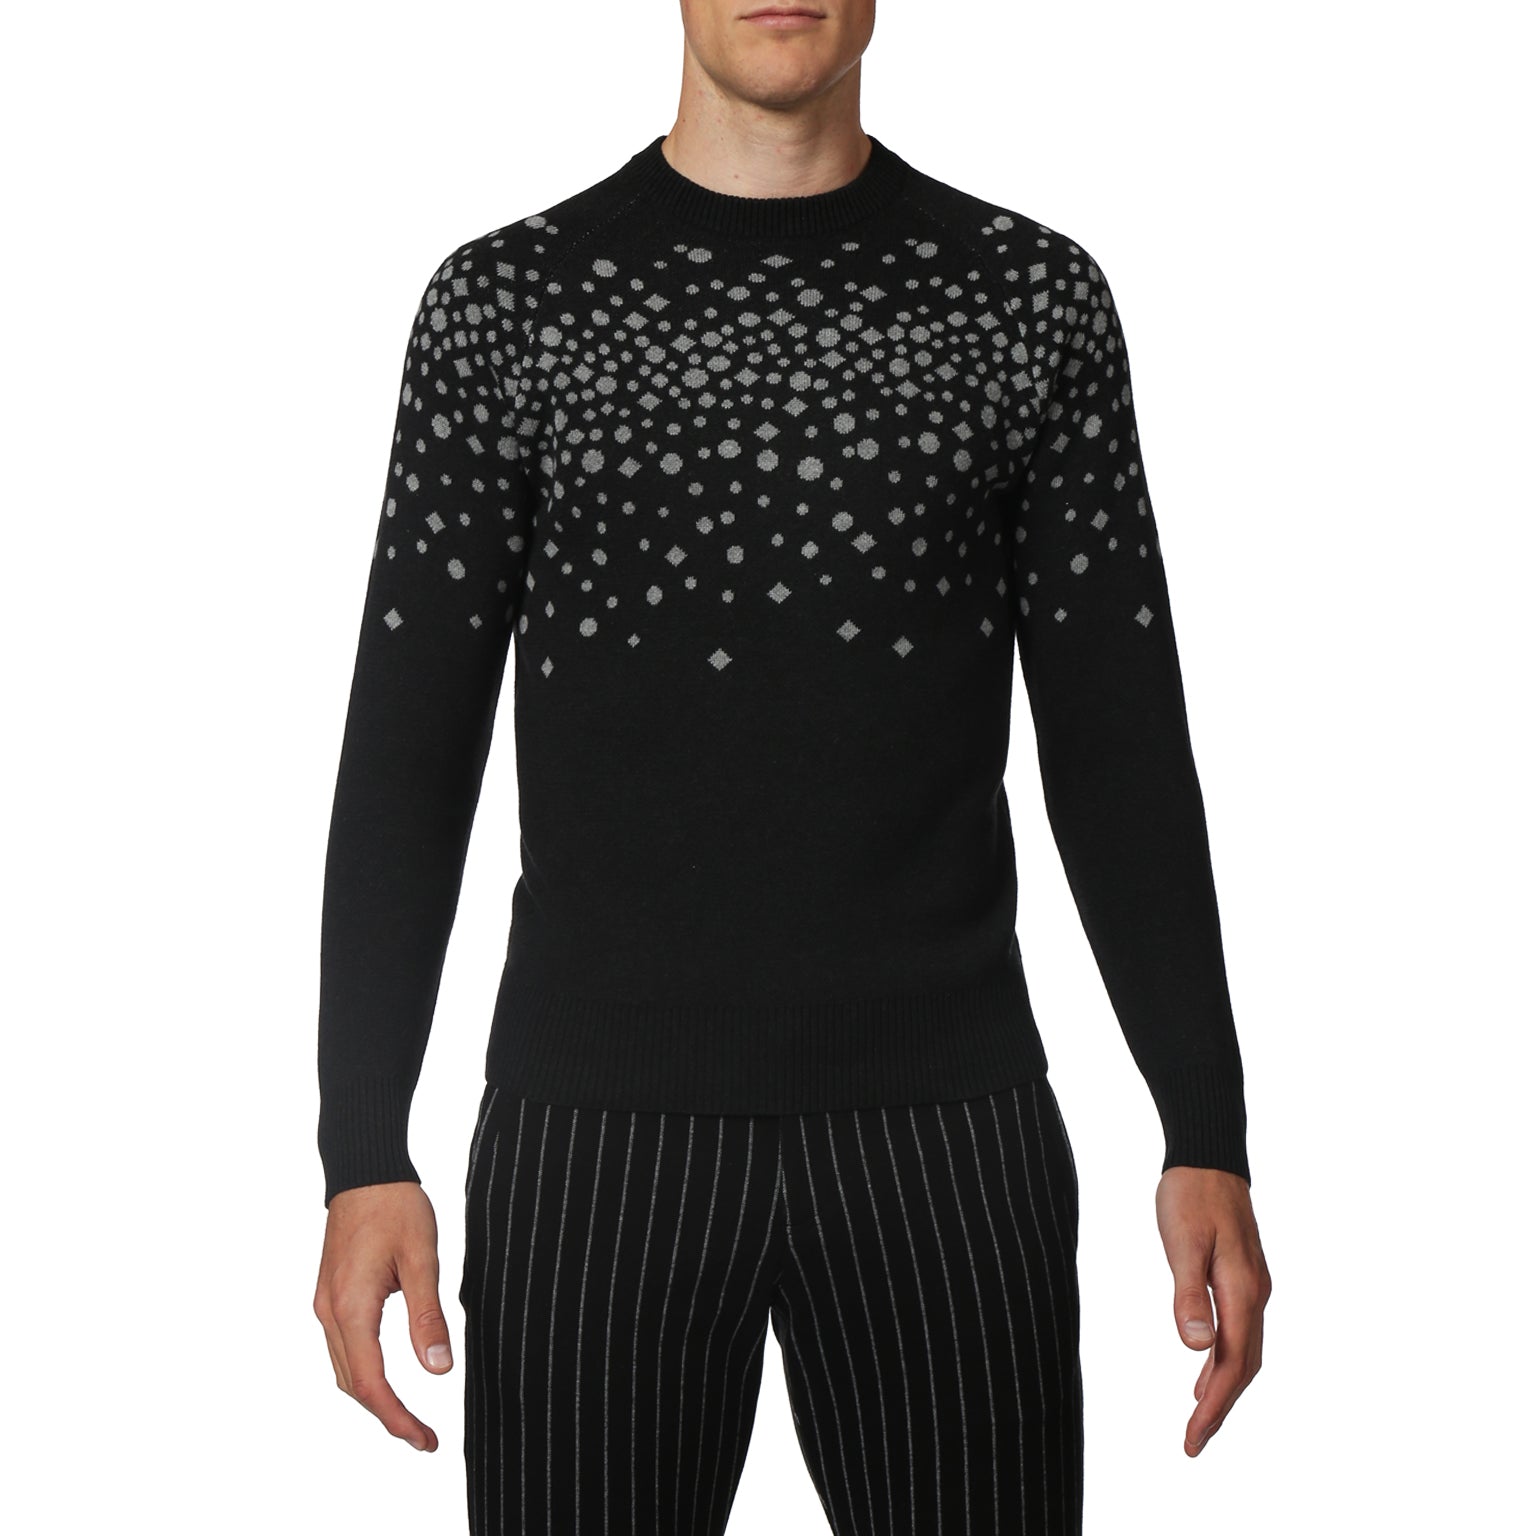 SAVE 70%- Space Black Starlight Sweater